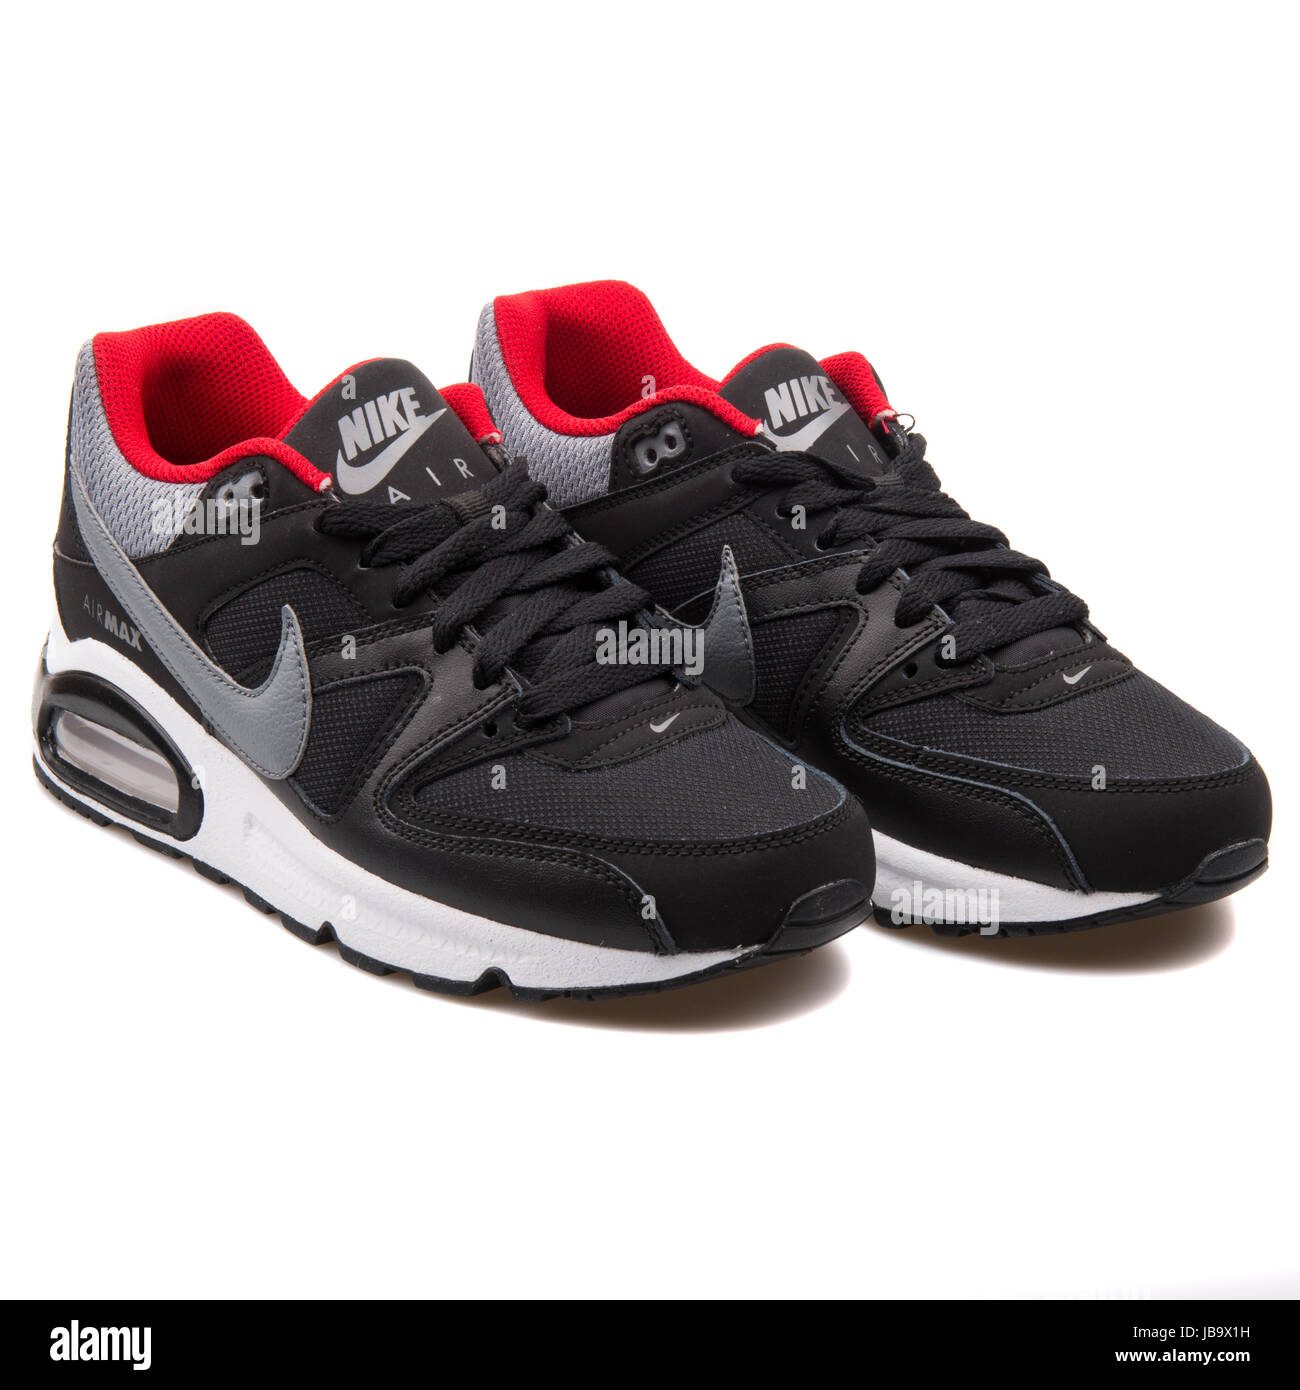 Nike Air Max Command (GS) schwarz, grau und rot Jugend Sport-Sneaker -  407759-065 Stockfotografie - Alamy